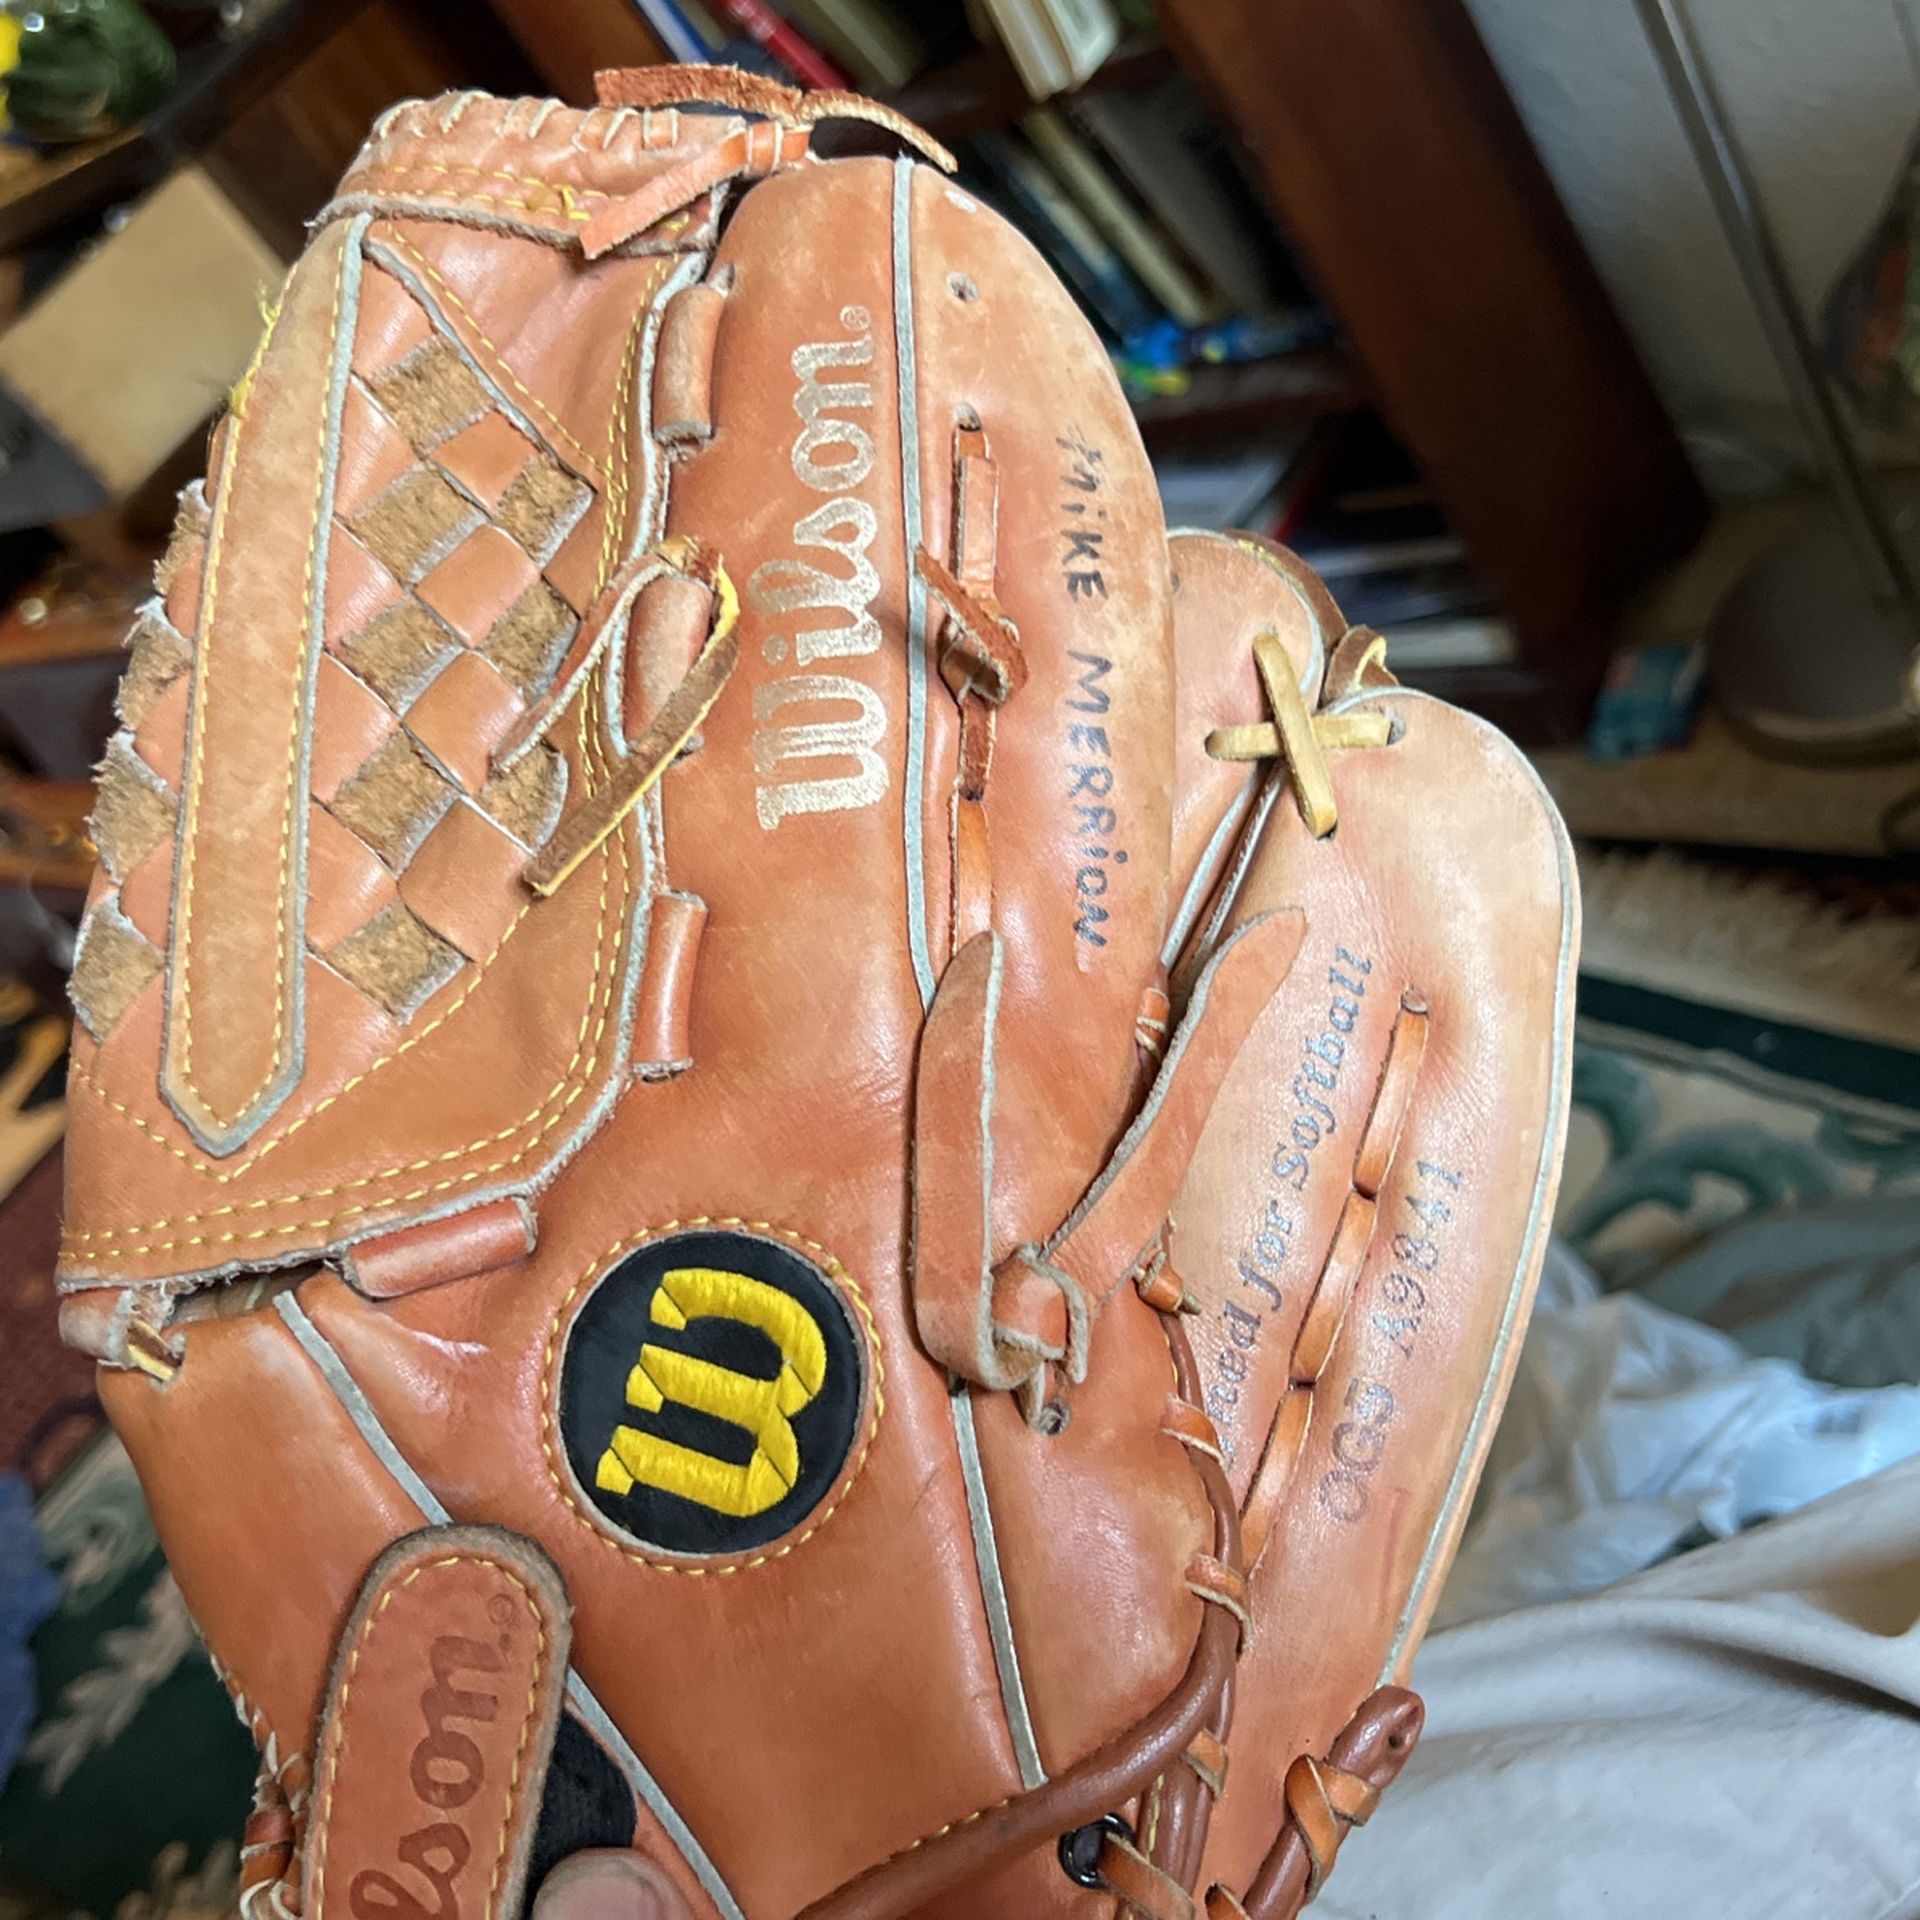 Wilson Baseball Glove Looks Like13.But Looks Like Softball